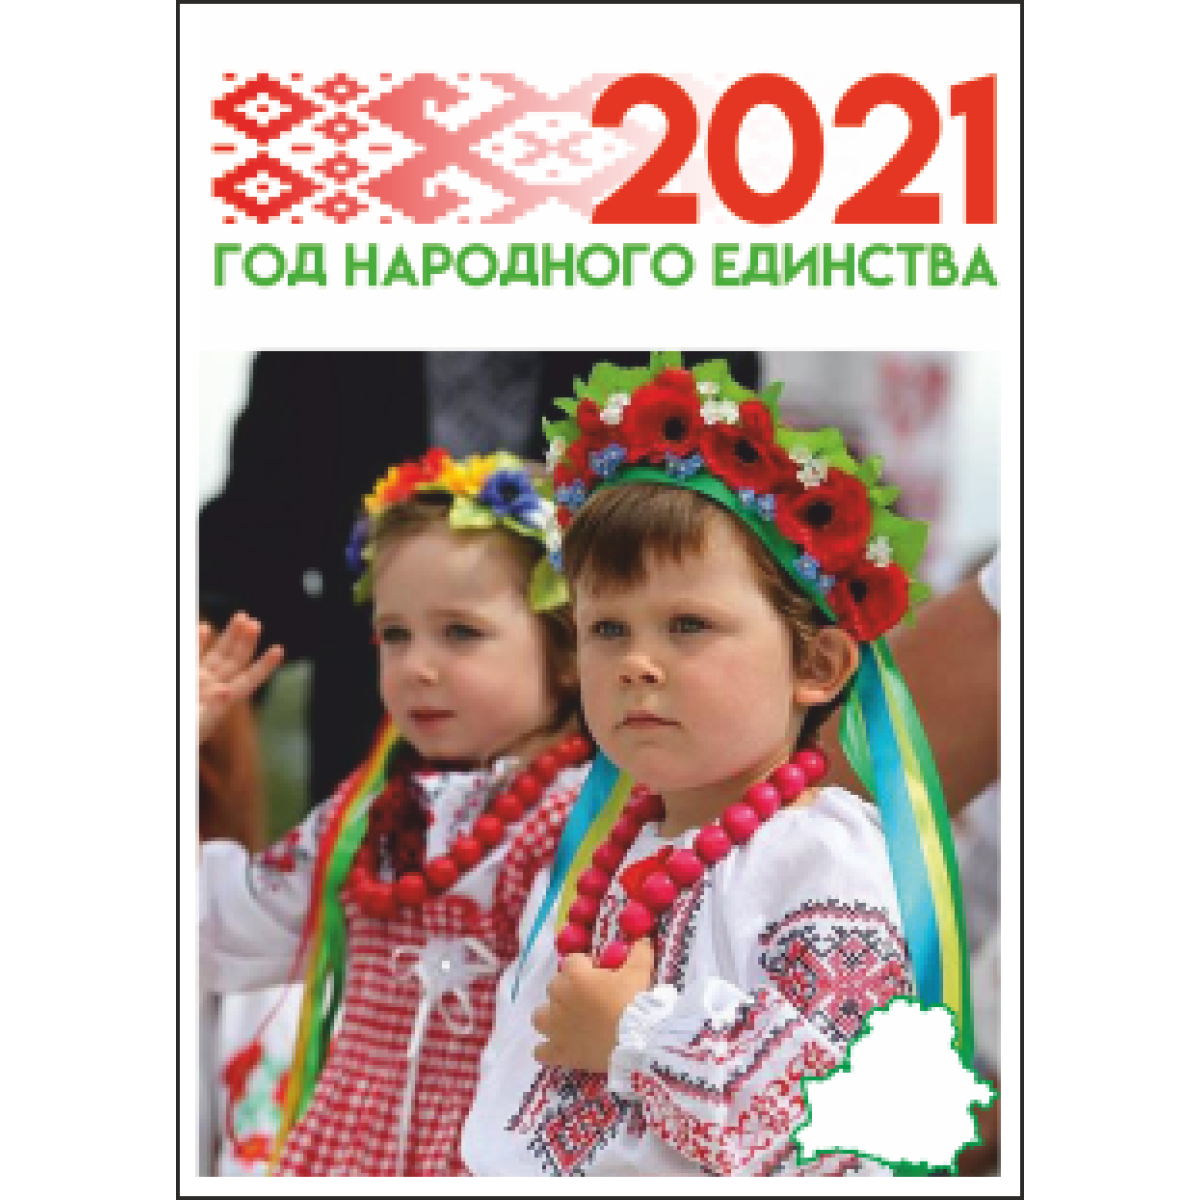 4498 Плакат 2021 год народного единства